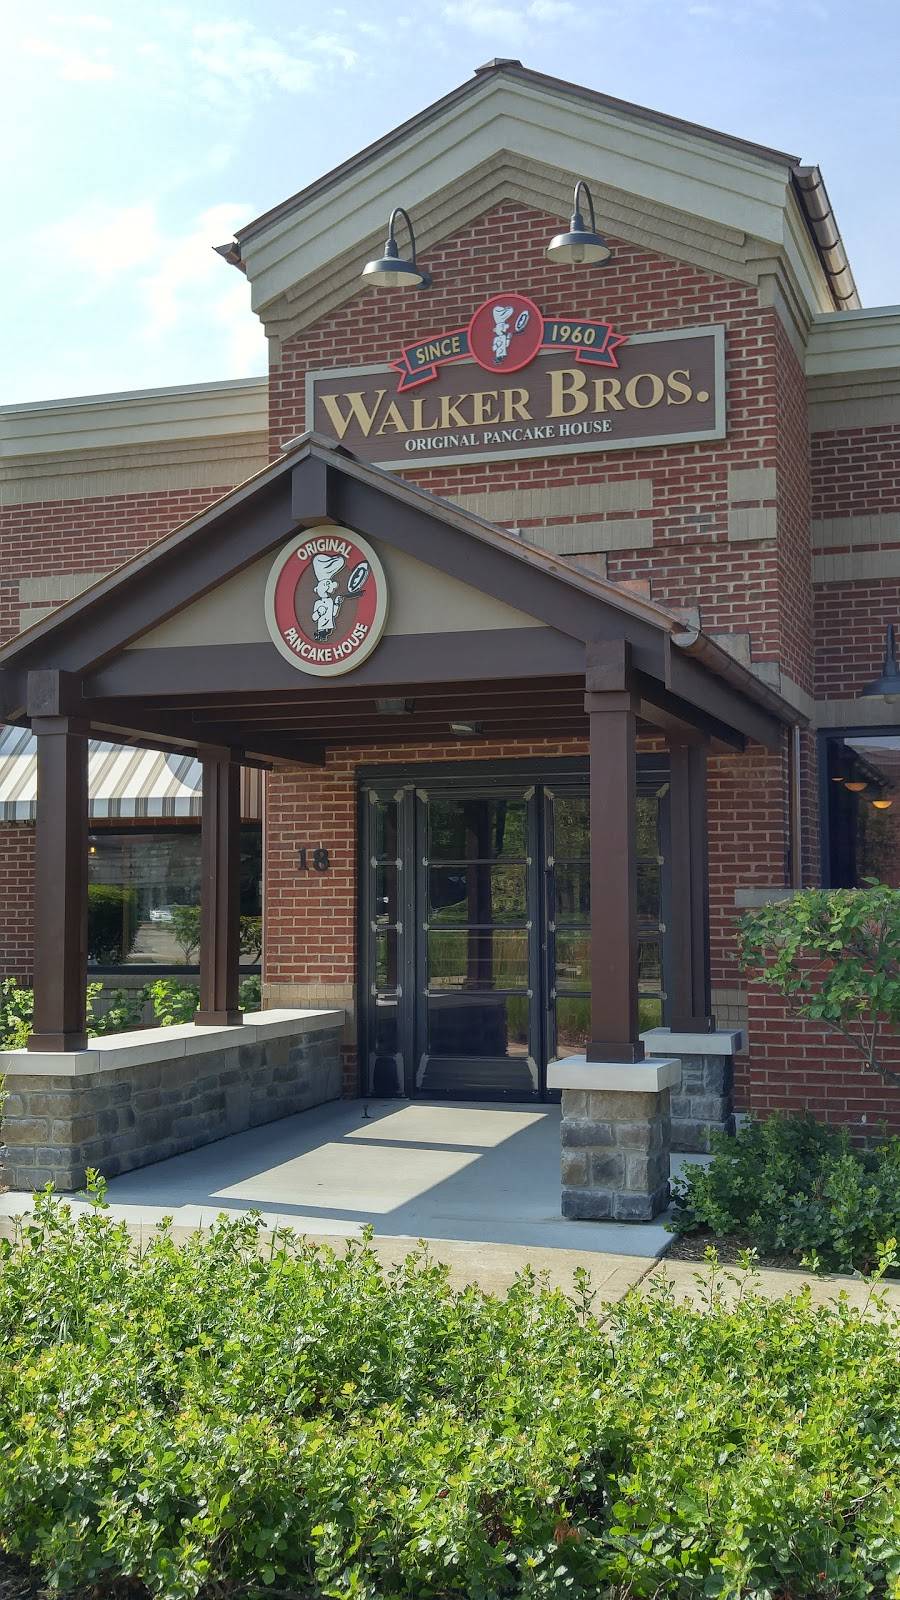 Walker Bros. Original Pancake House | bakery | 18 S Roselle Rd, Schaumburg, IL 60193, USA | 8475658600 OR +1 847-565-8600